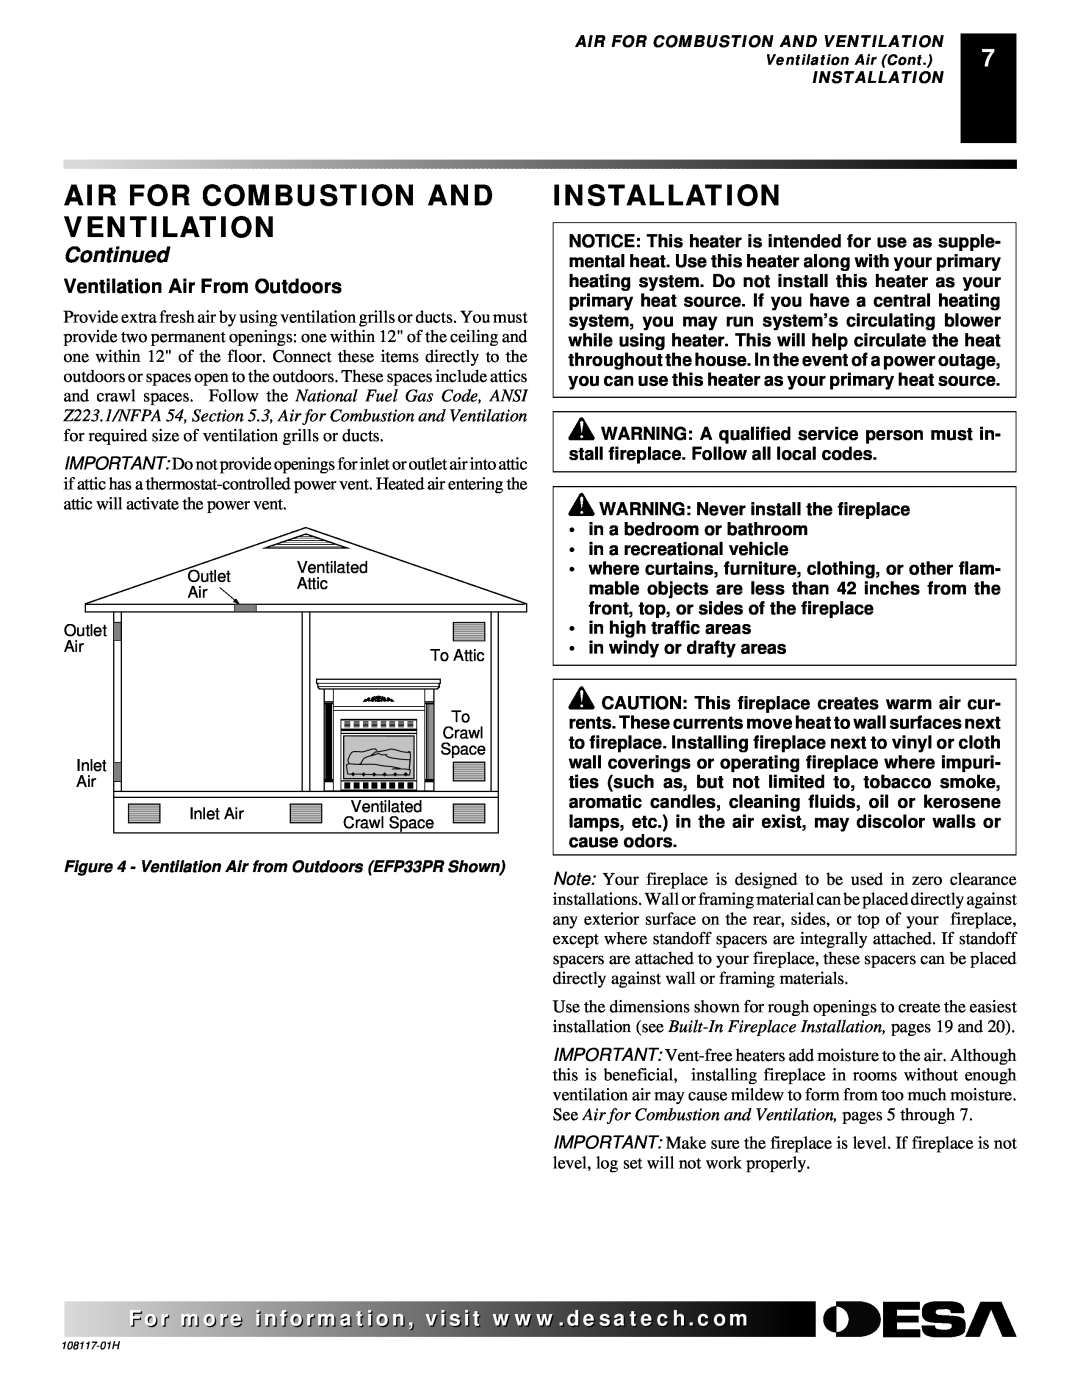 Desa EFP33PR, EFP33NR Installation, Air For Combustion And Ventilation, Continued, Ventilation Air From Outdoors 